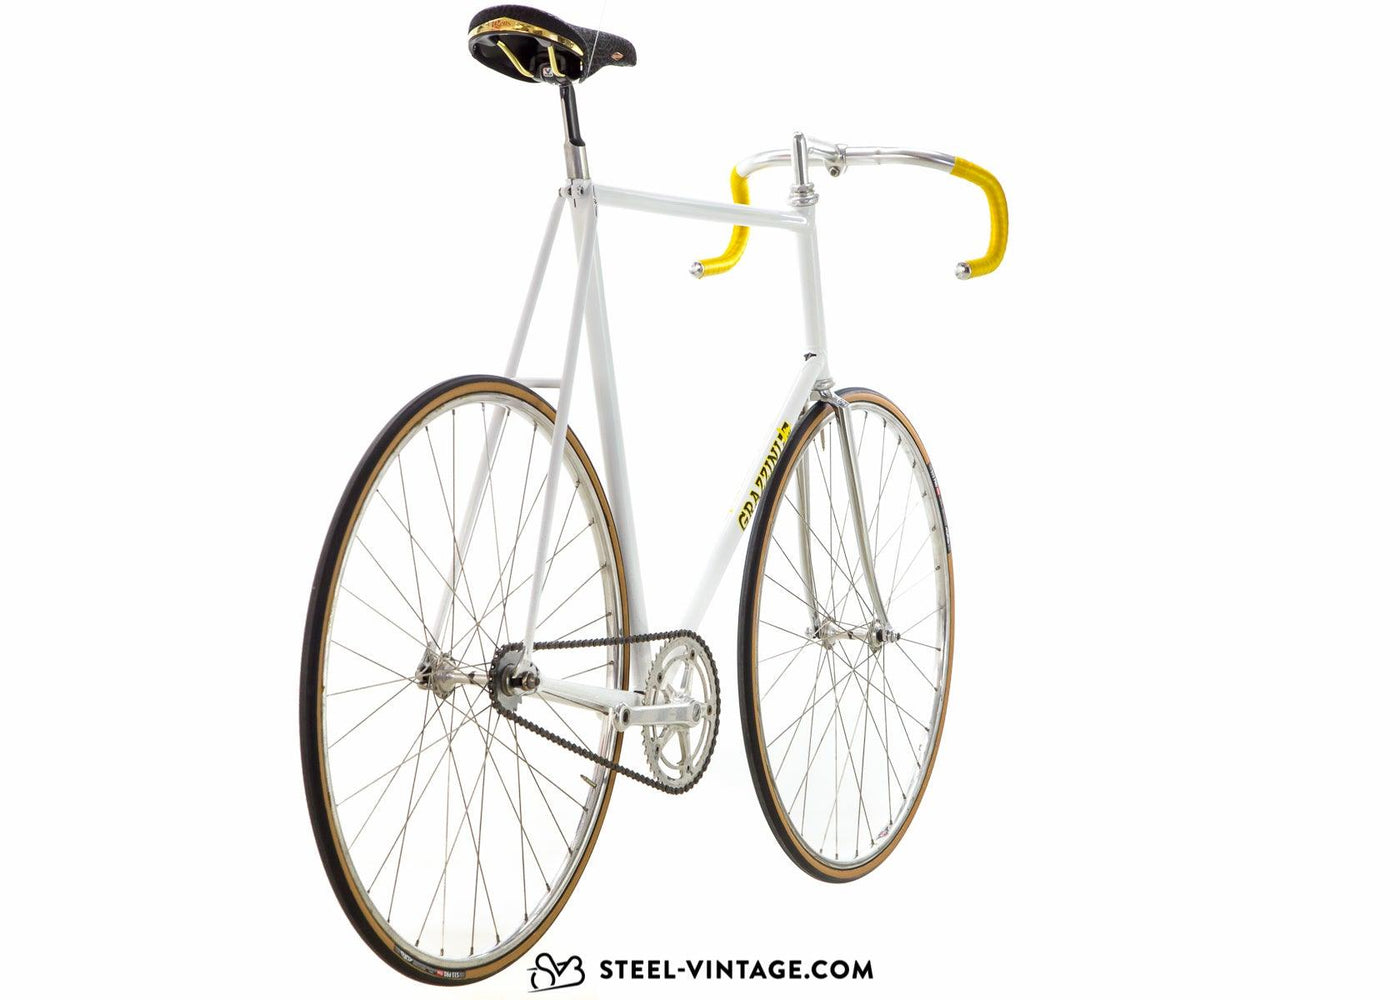 Grazzini Pista Classic Track Bicycle 1980s - Steel Vintage Bikes